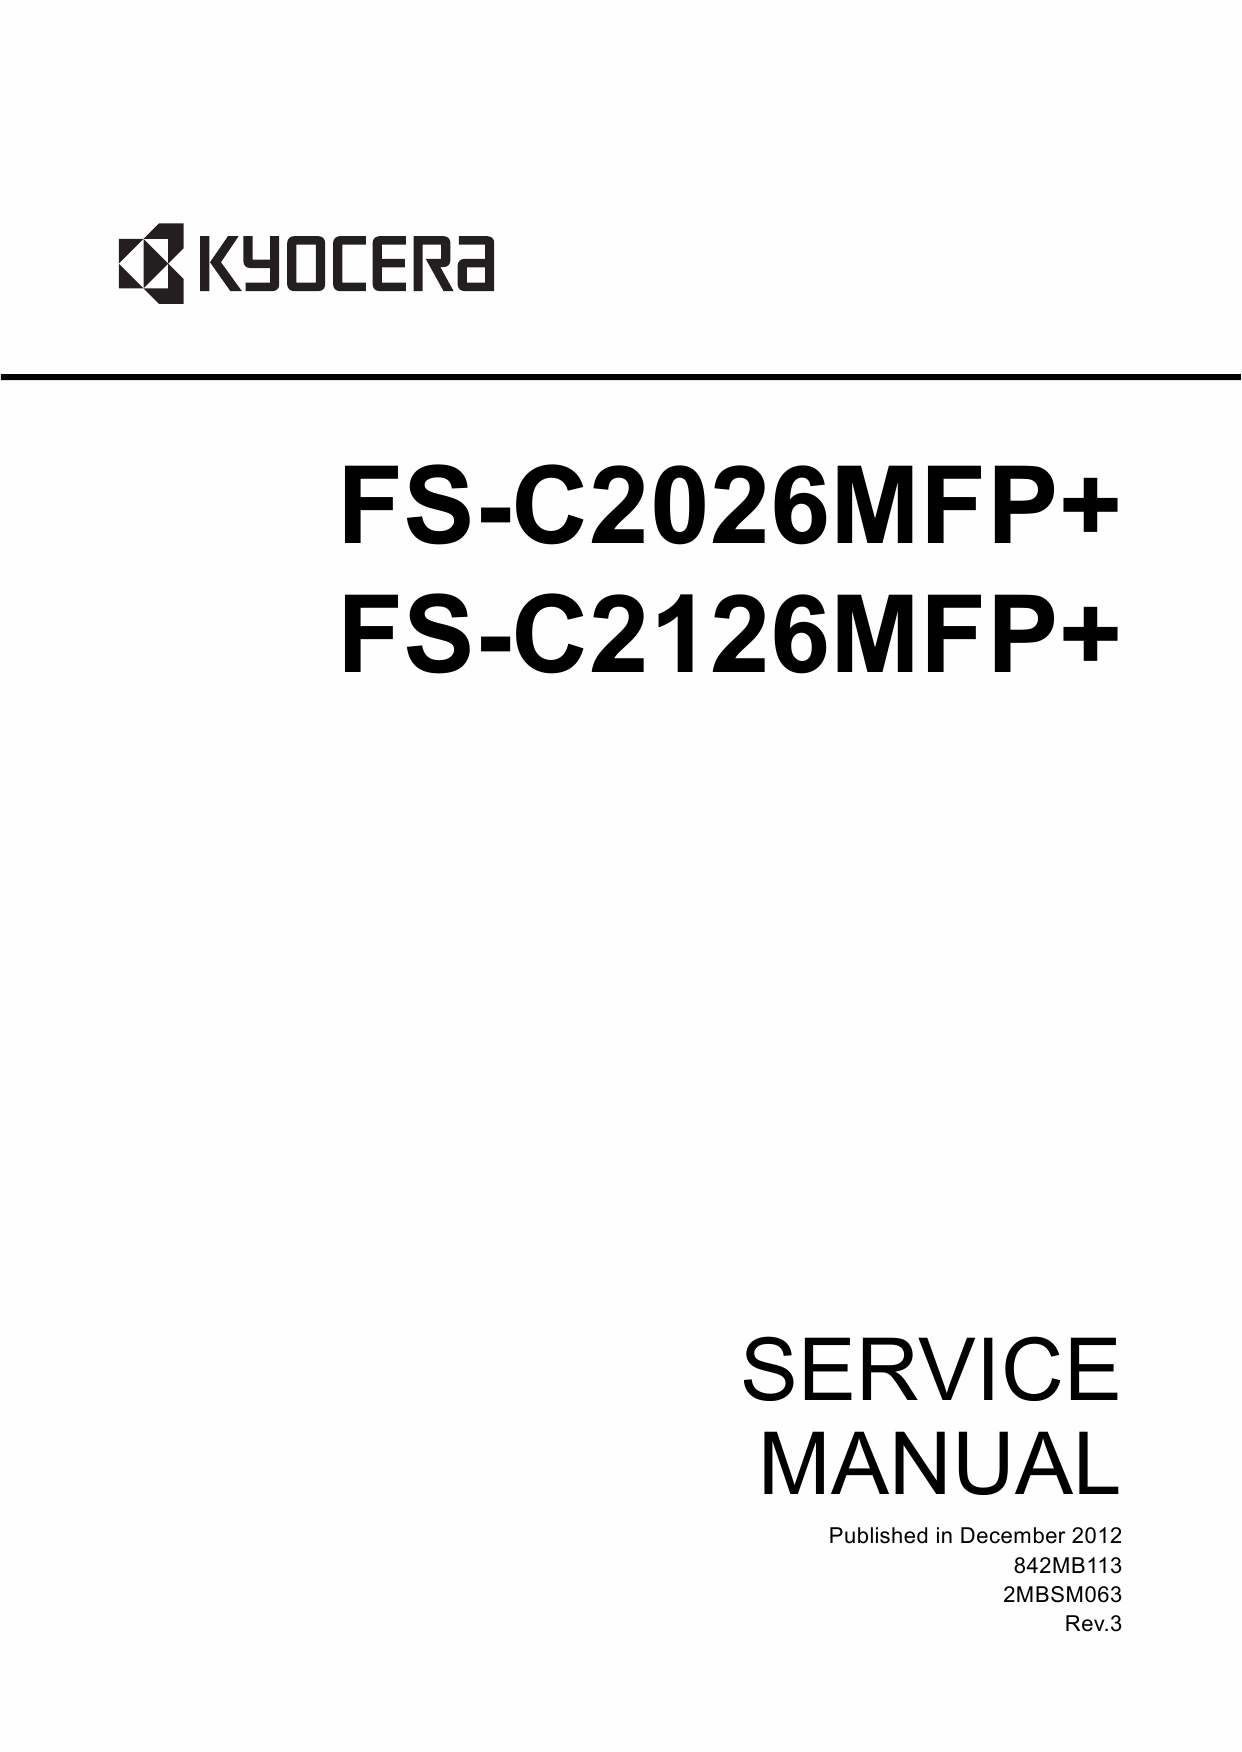 KYOCERA ColorMFP FS-C2026MFP+ C2126MFP+ Service Manual-1